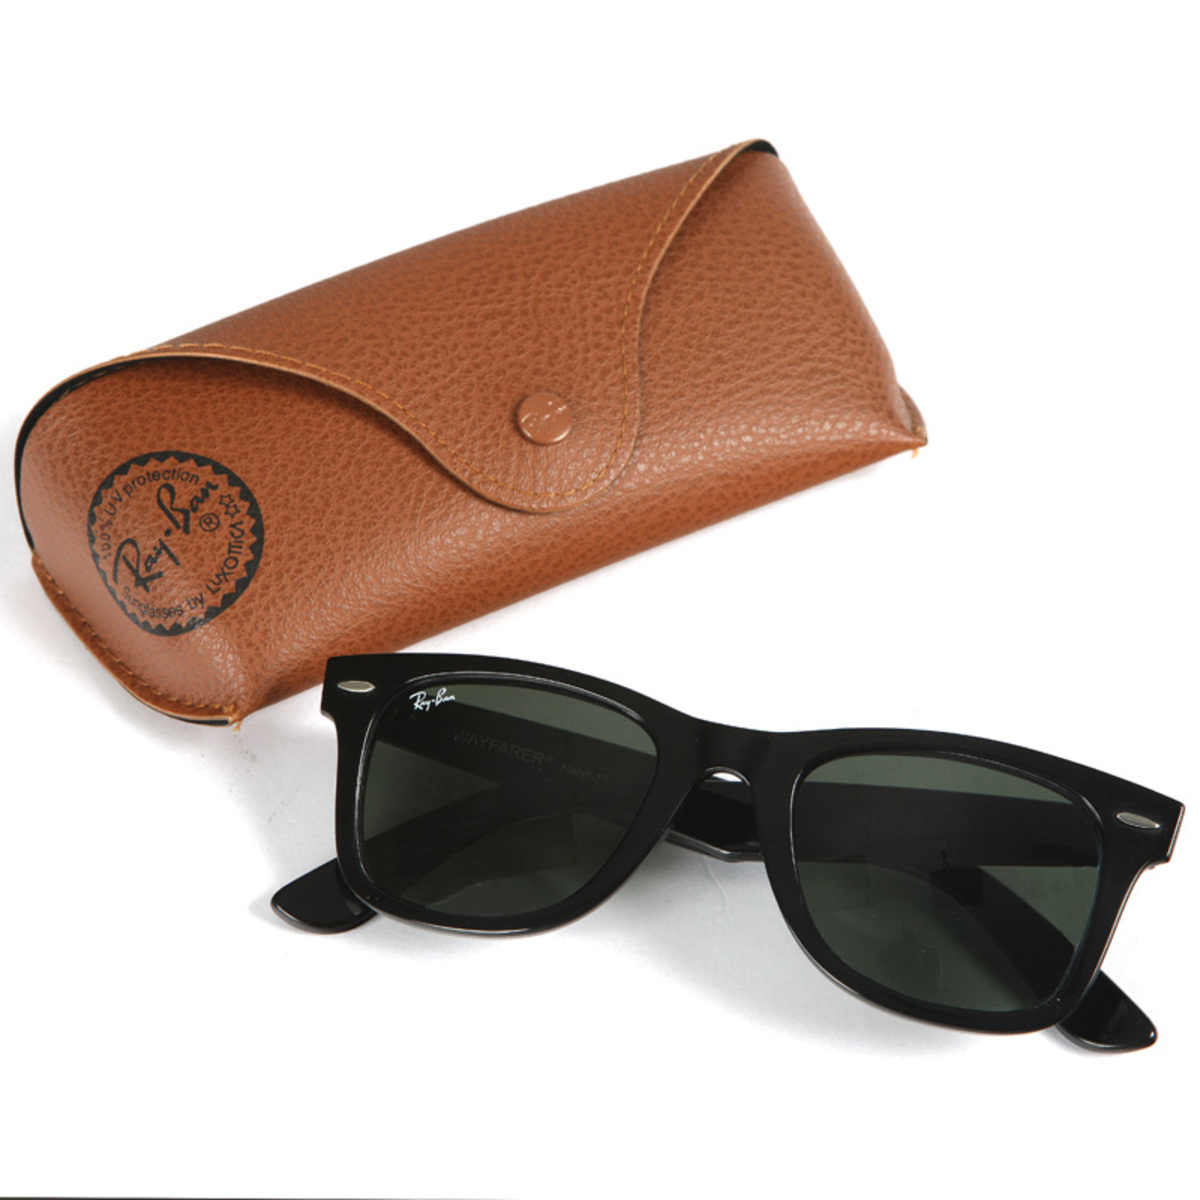 Ray-Ban Original Wayfarer Black Sunglasses with Green Lenses, RB2140 901